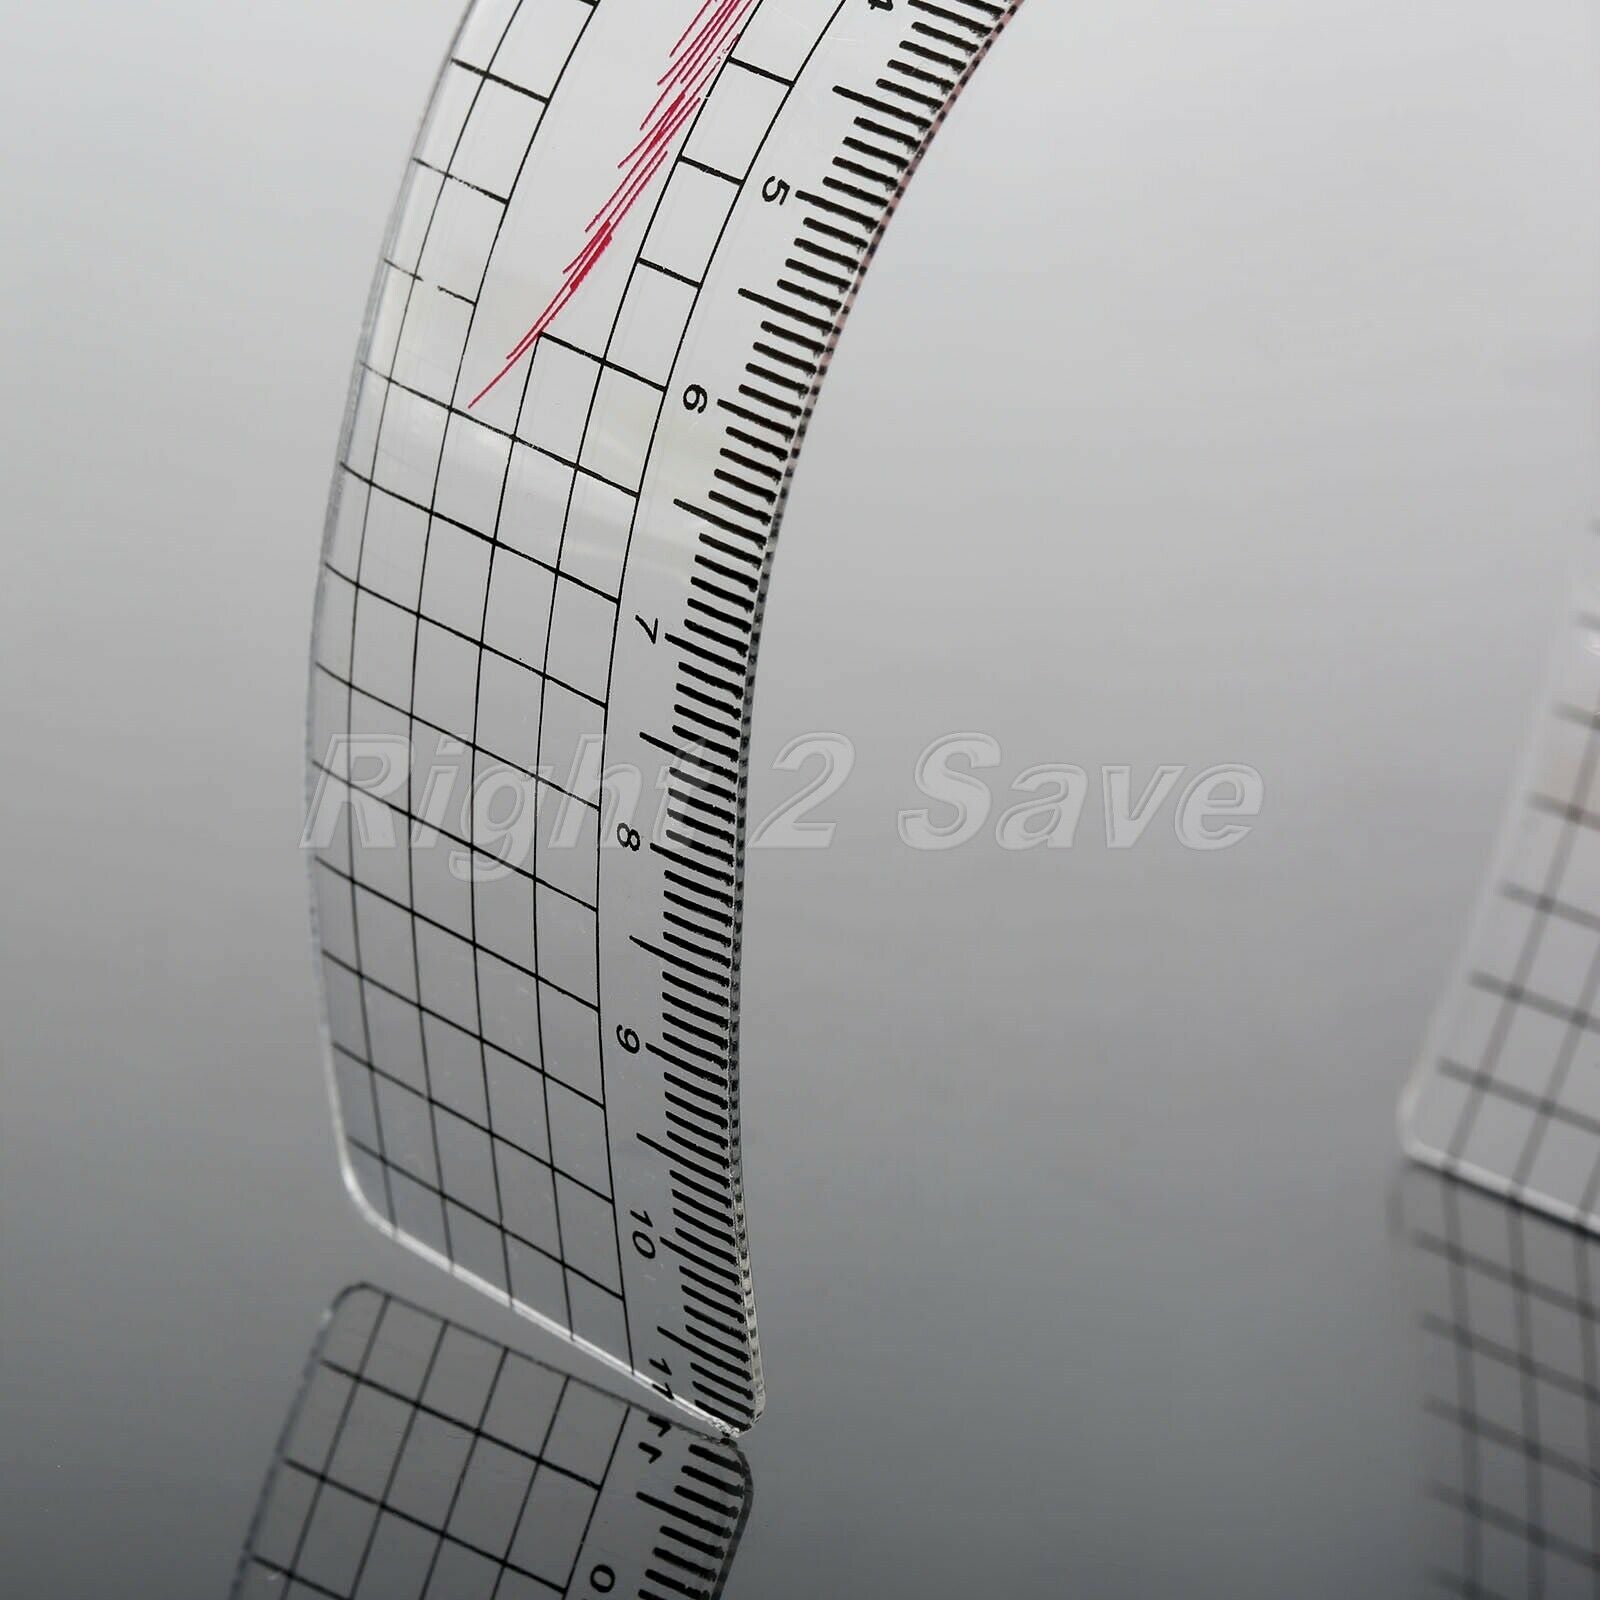 1Pc 22.1cmx3.4cm Eyebrow Grooming Stencil Shaper Ruler Template Measuring Tool